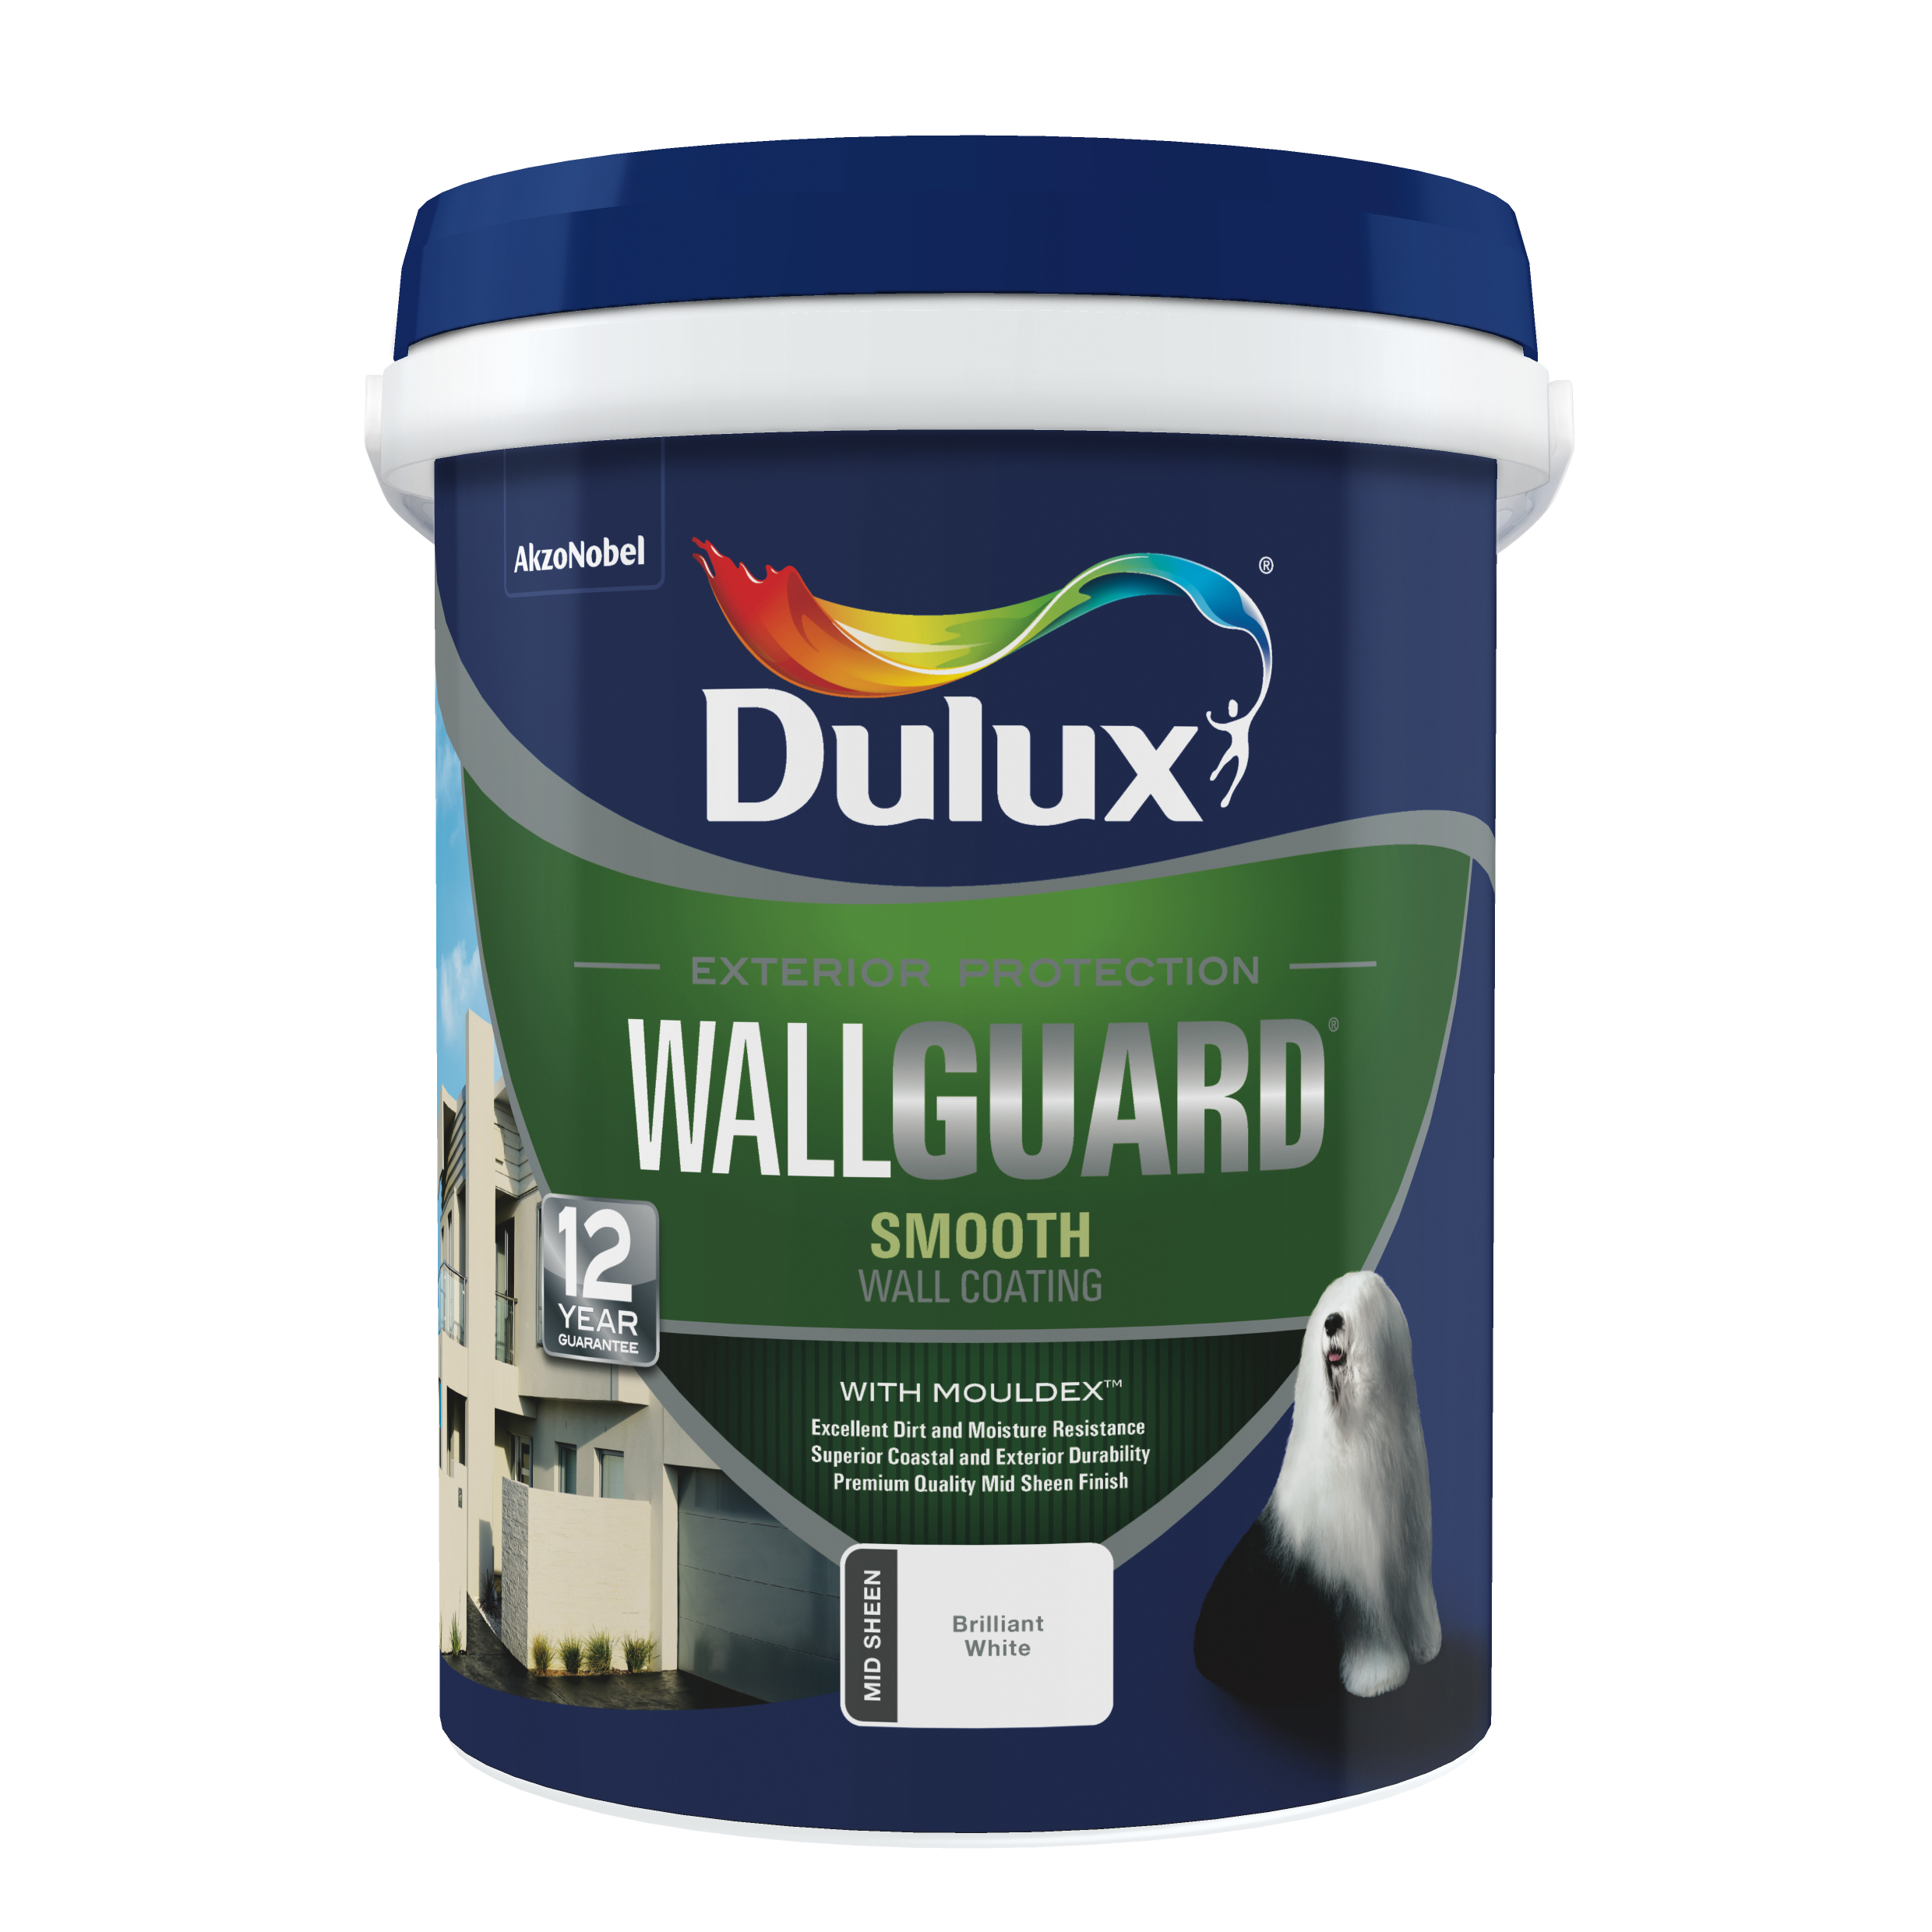 Dulux Wall Guard Colour Chart